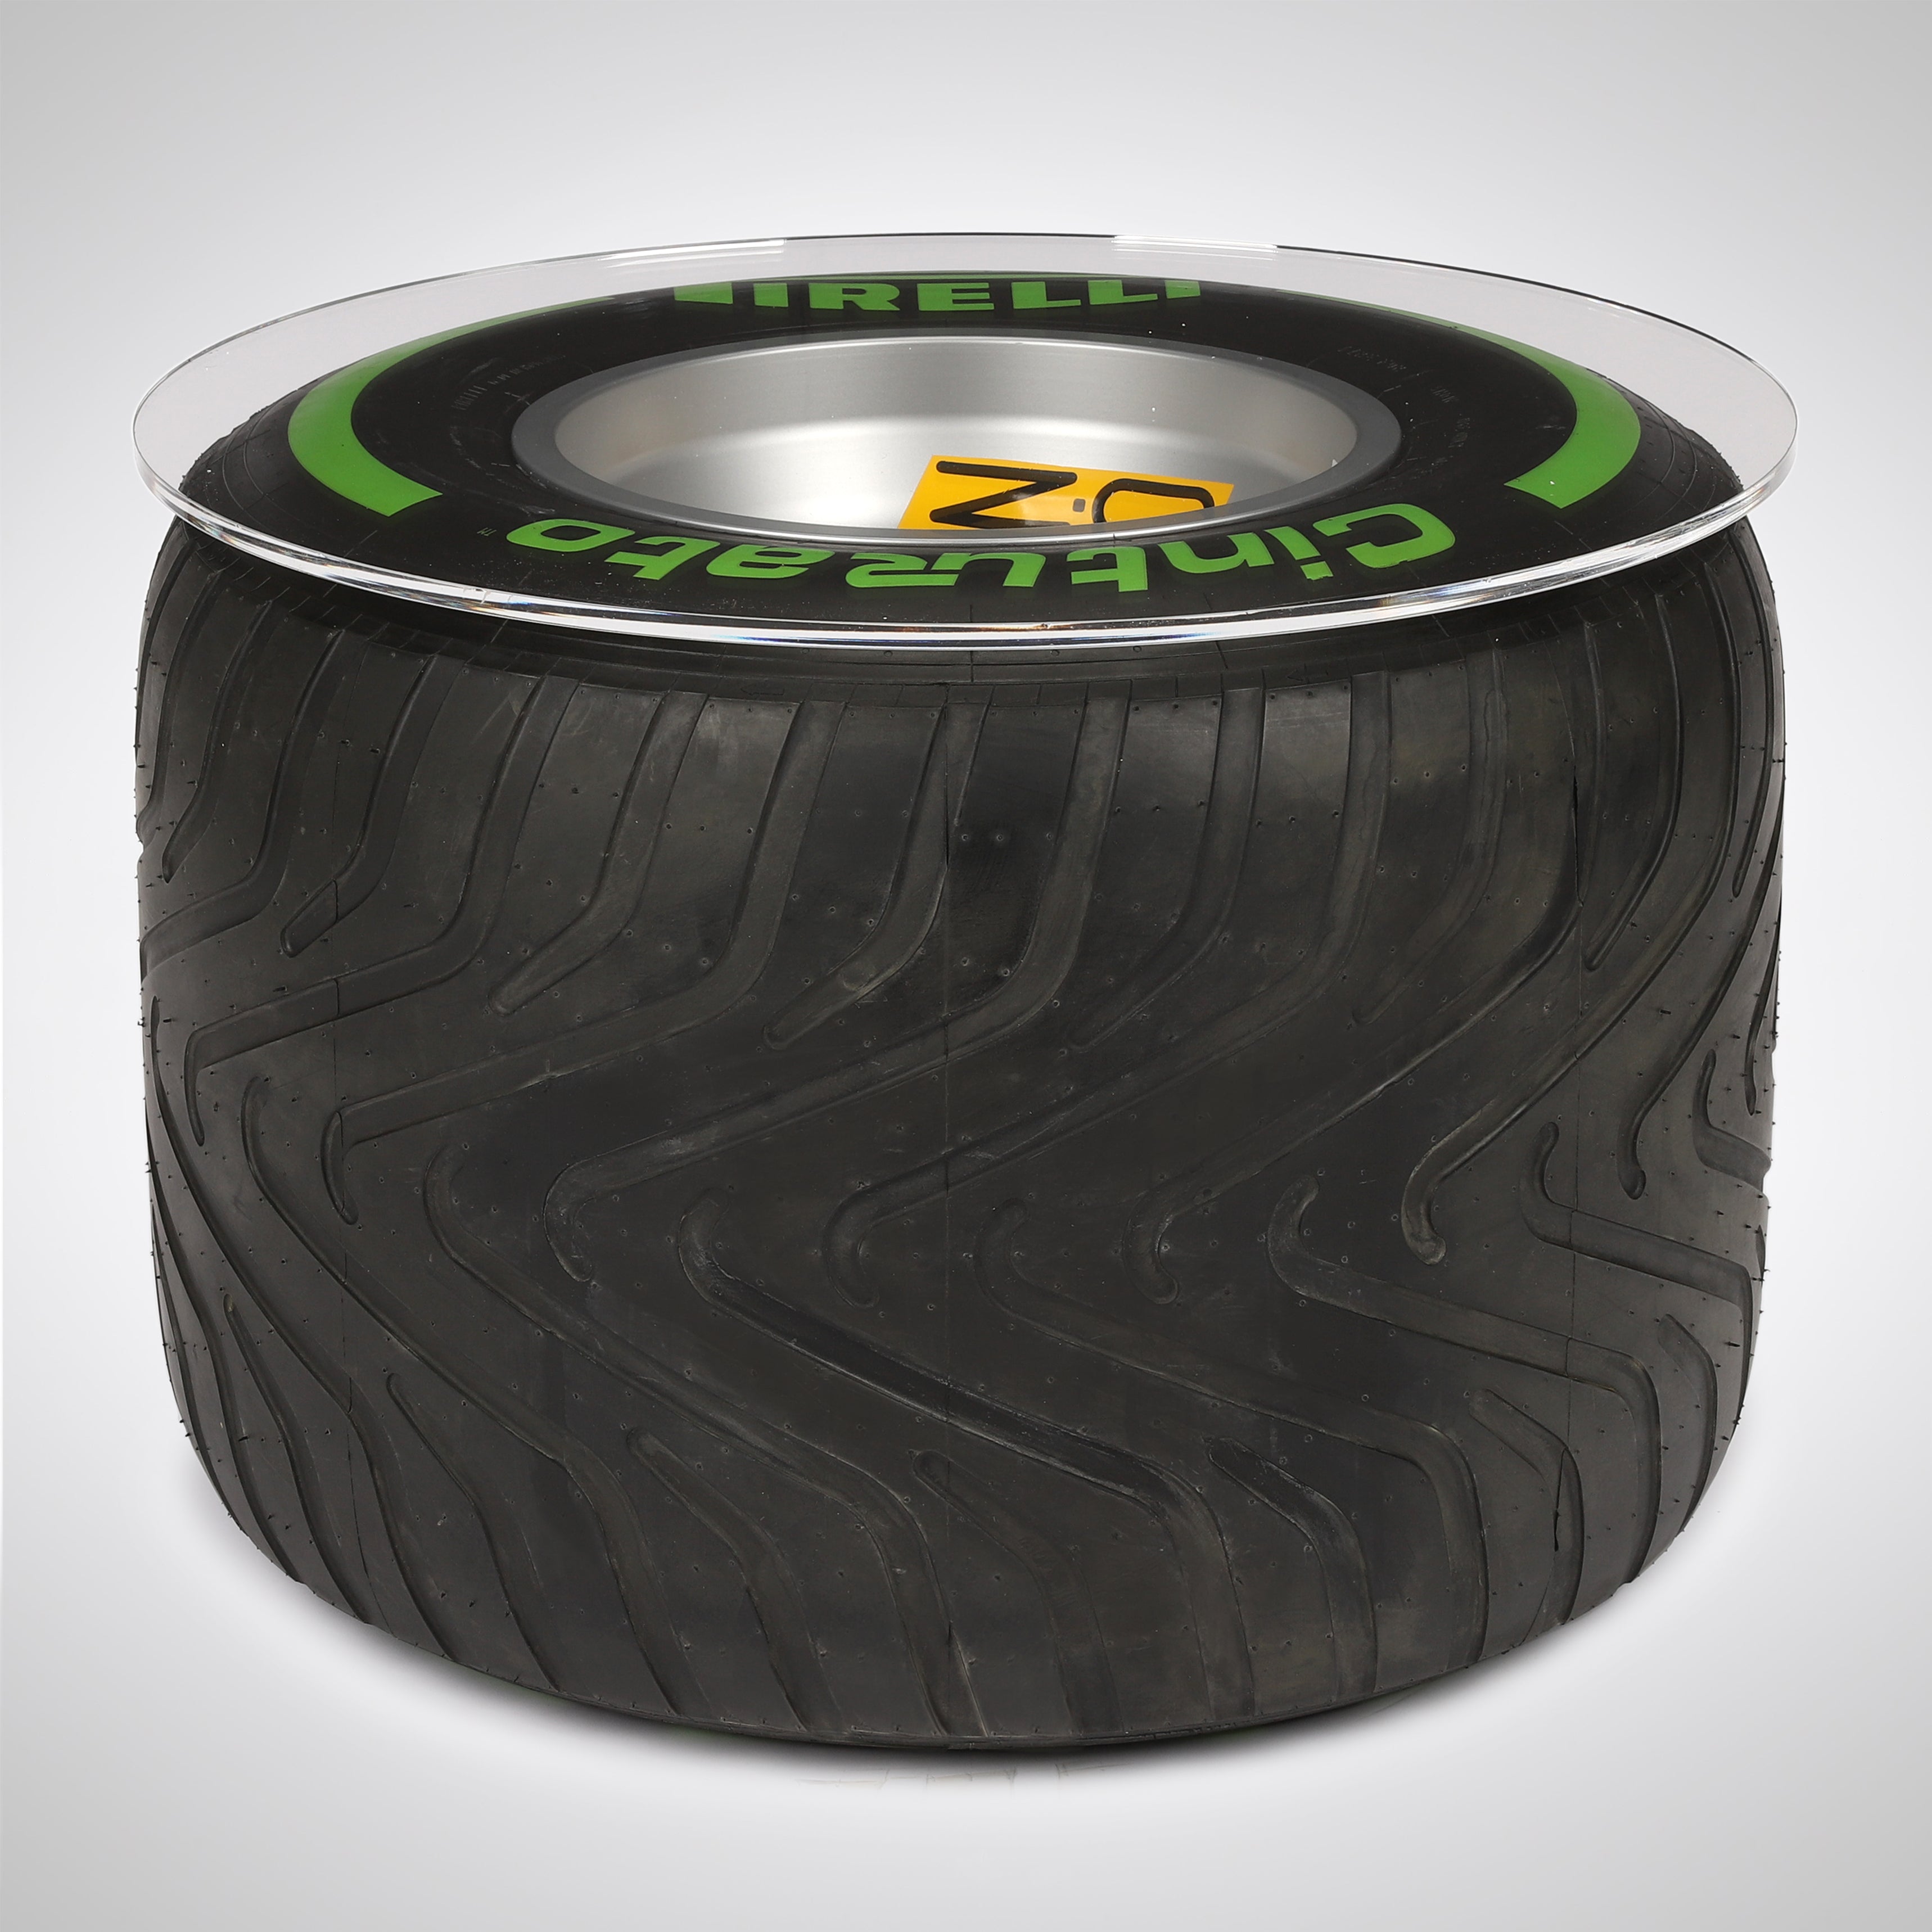 Pirelli 2018 Wheel Rim & Tyre Table - Green Intermediate Compound